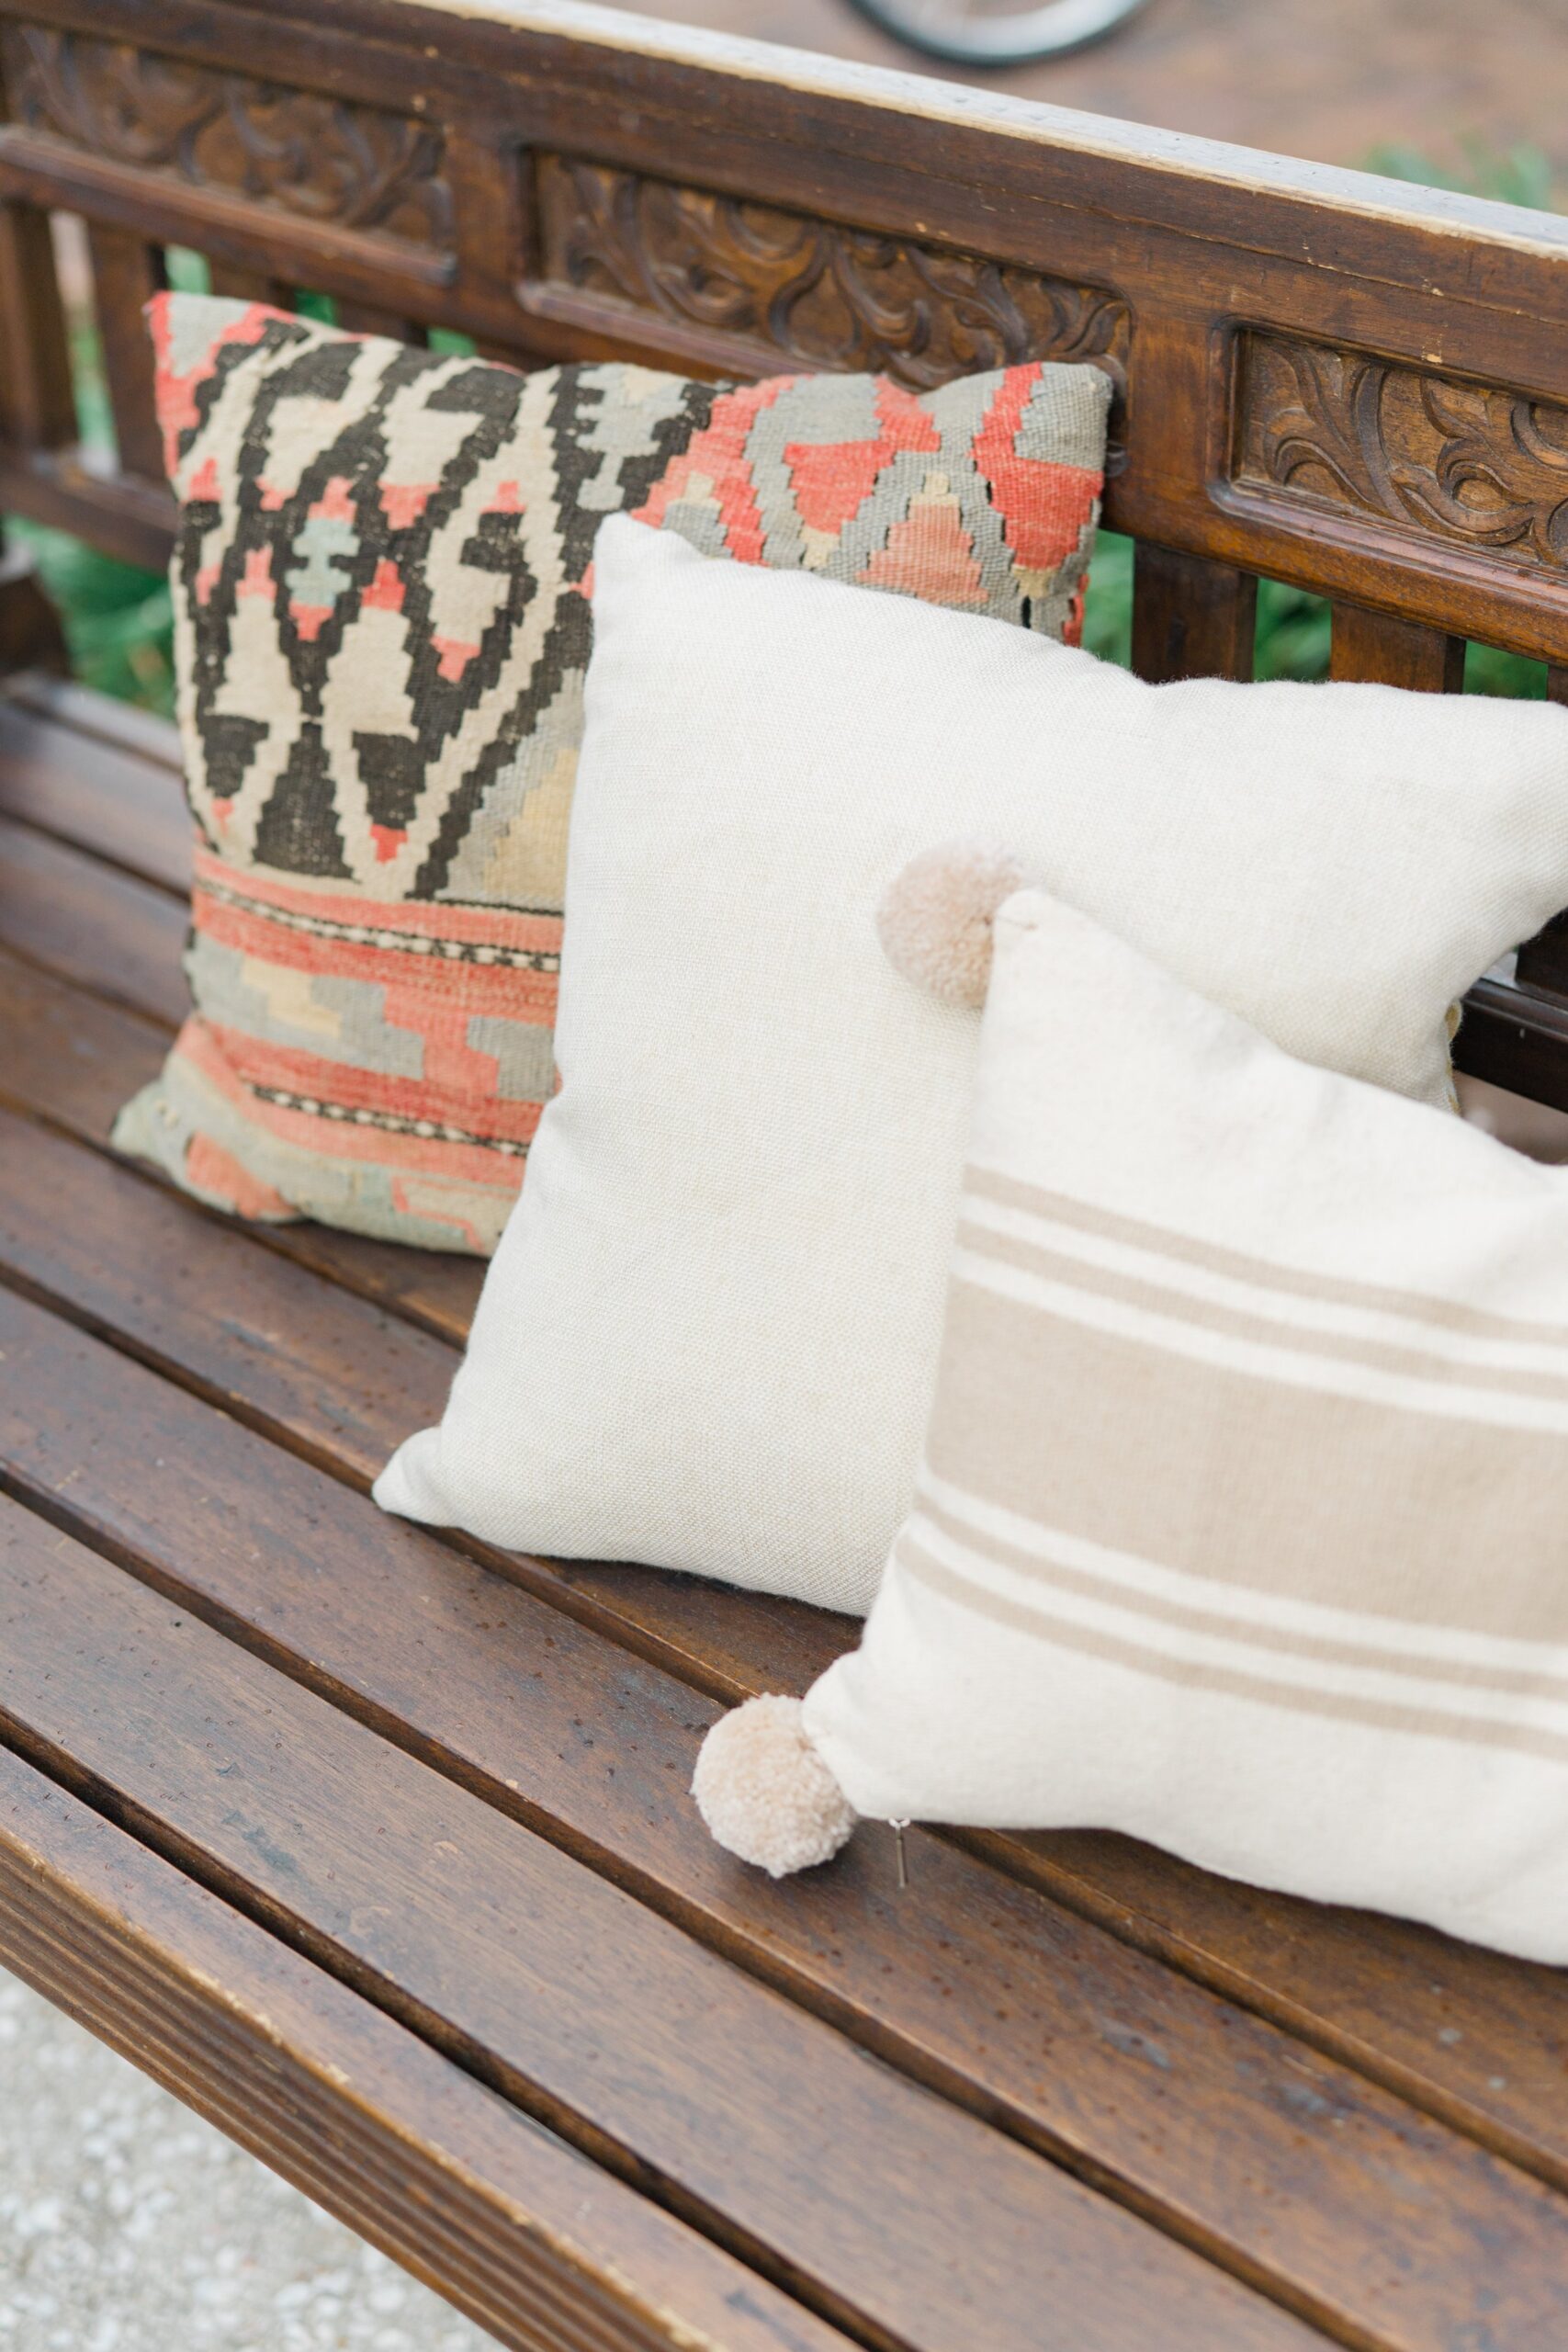 Boho pillows and wooden bench at outdoor wedding reception.